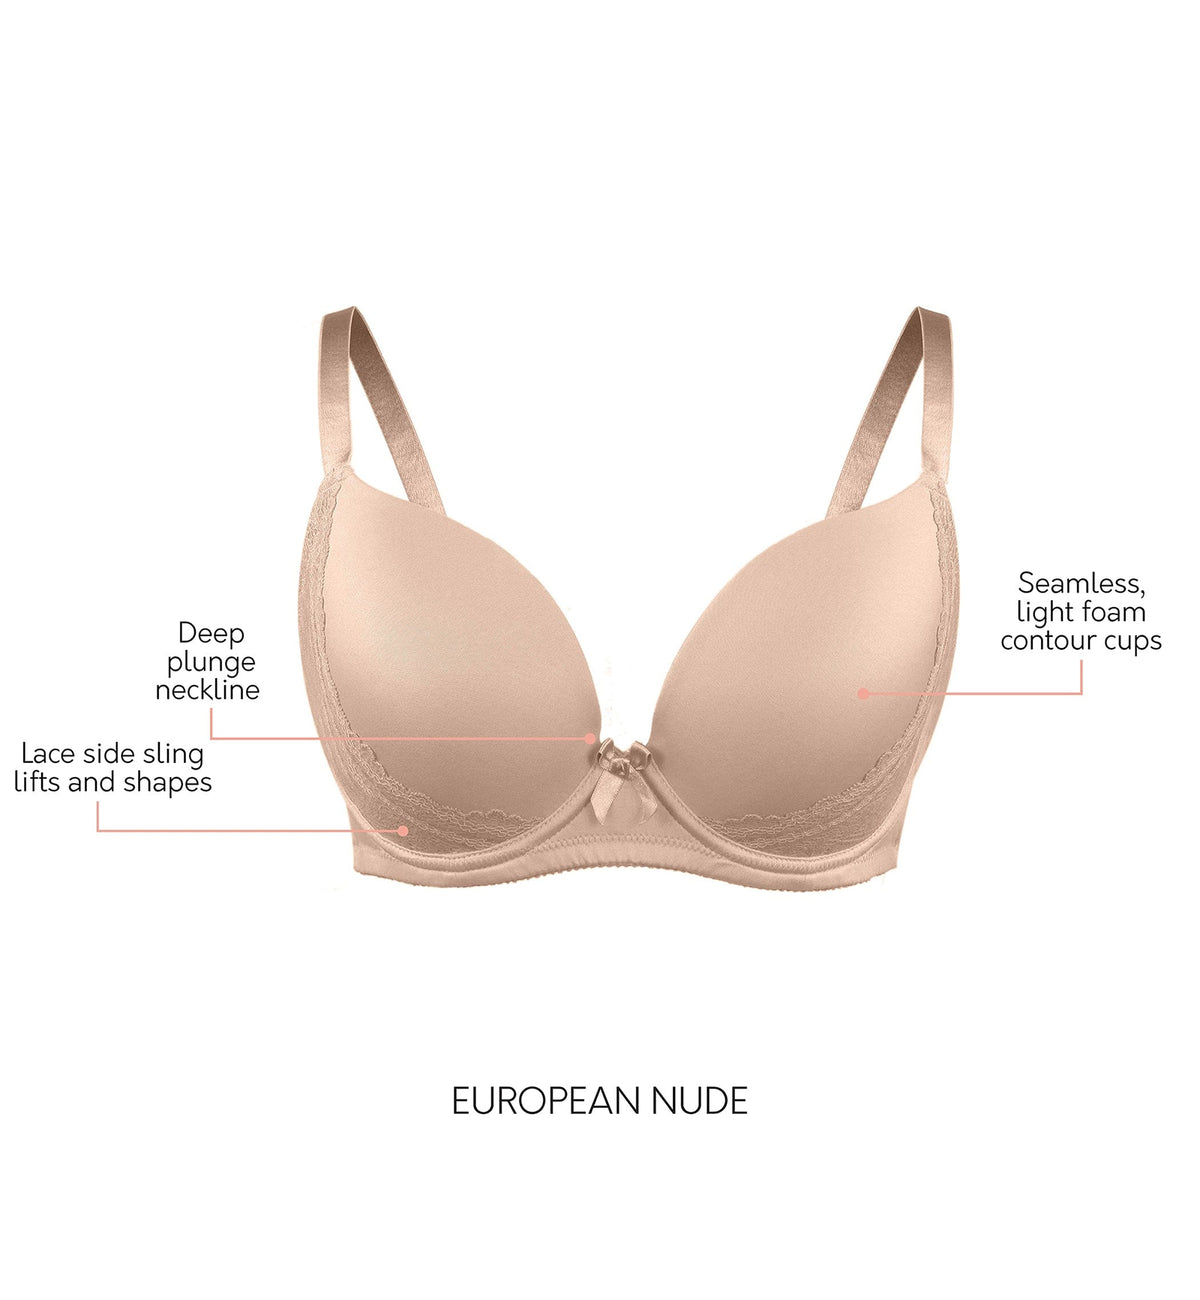 Parfait Casey Molded Plunge Underwire Bra (2801),30D,European Nude - European Nude,30D